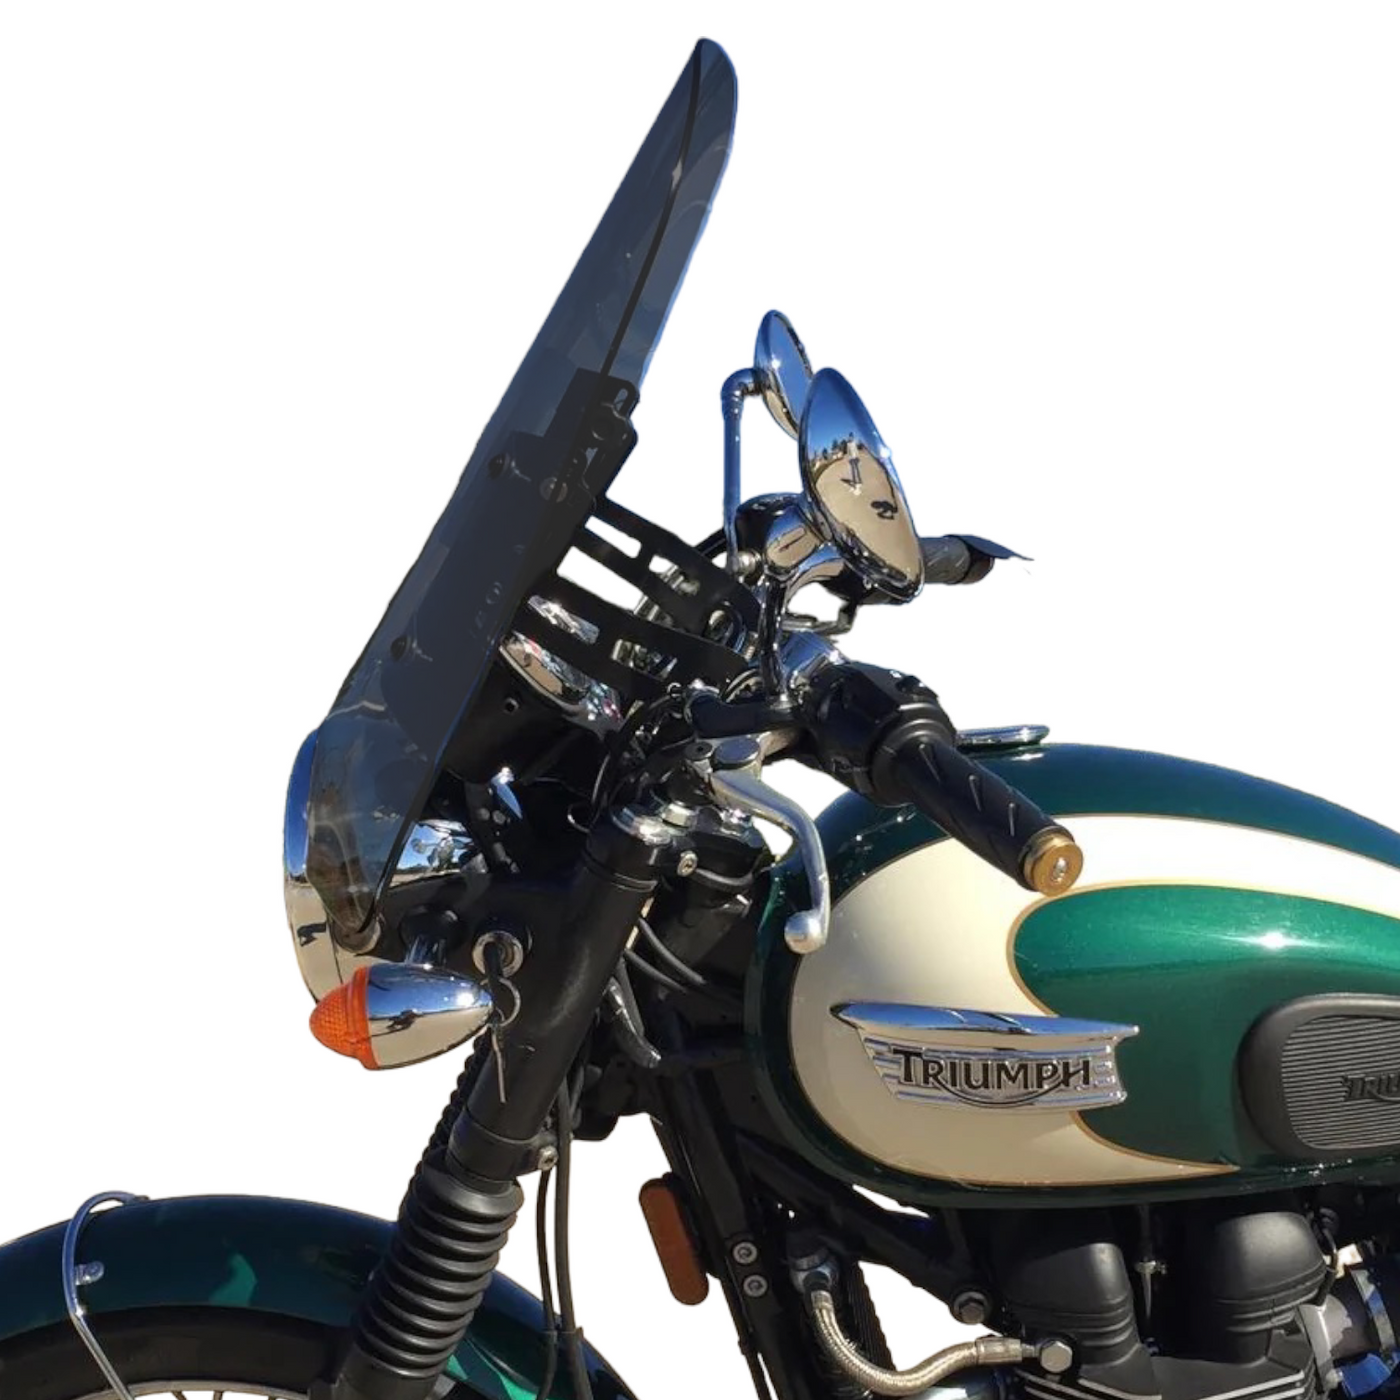 Adjustable Windshield System for Triumph Bonneville T100 (2006 - 2016)